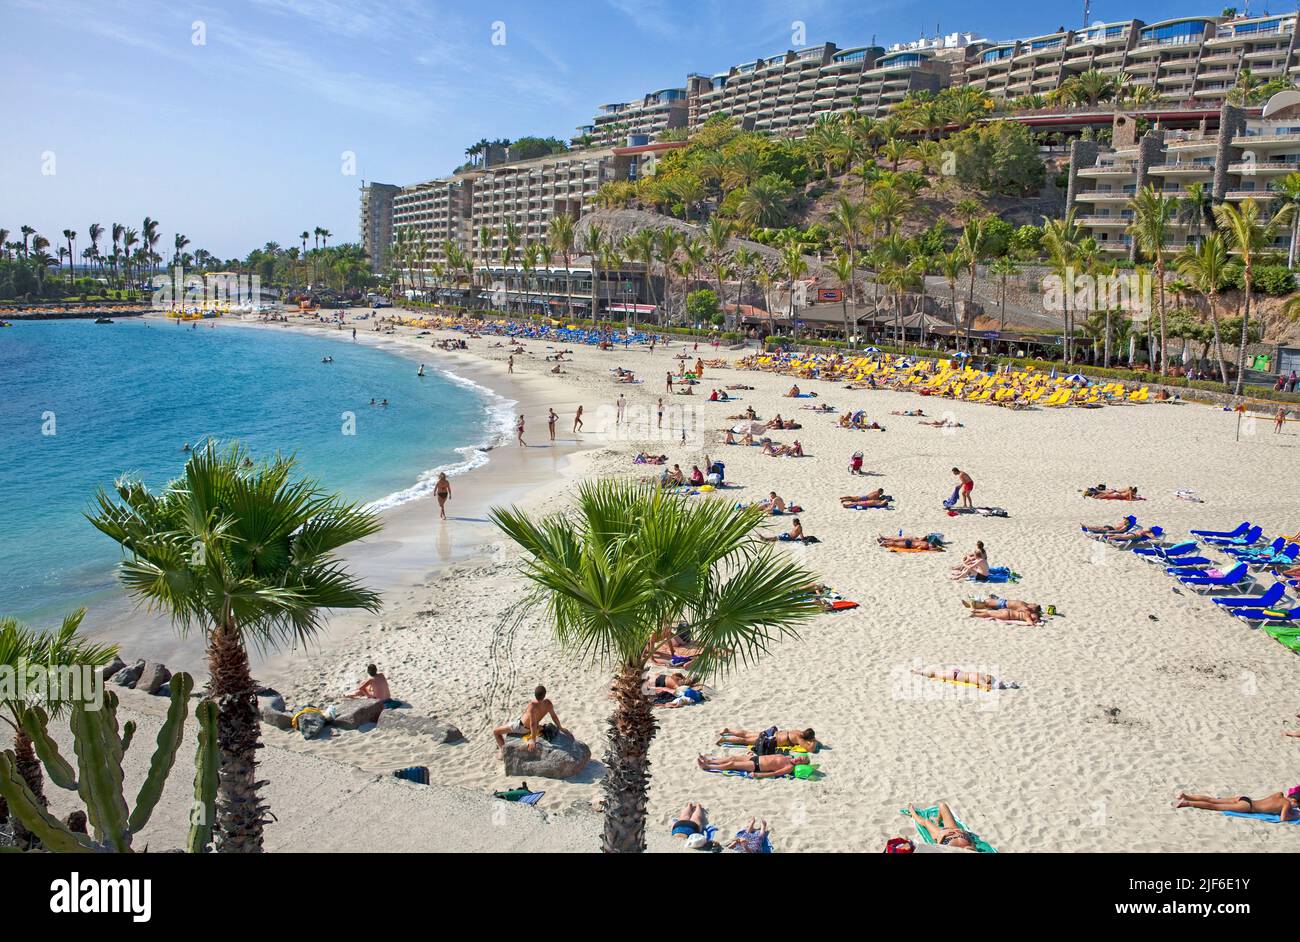 Strandleben an der Playa de la Verga, Badestrand im Hotel Aquamarina, Ferienort Anfi del Mar, Arguineguin, Kanarische Inseln, Spanien Stockfoto